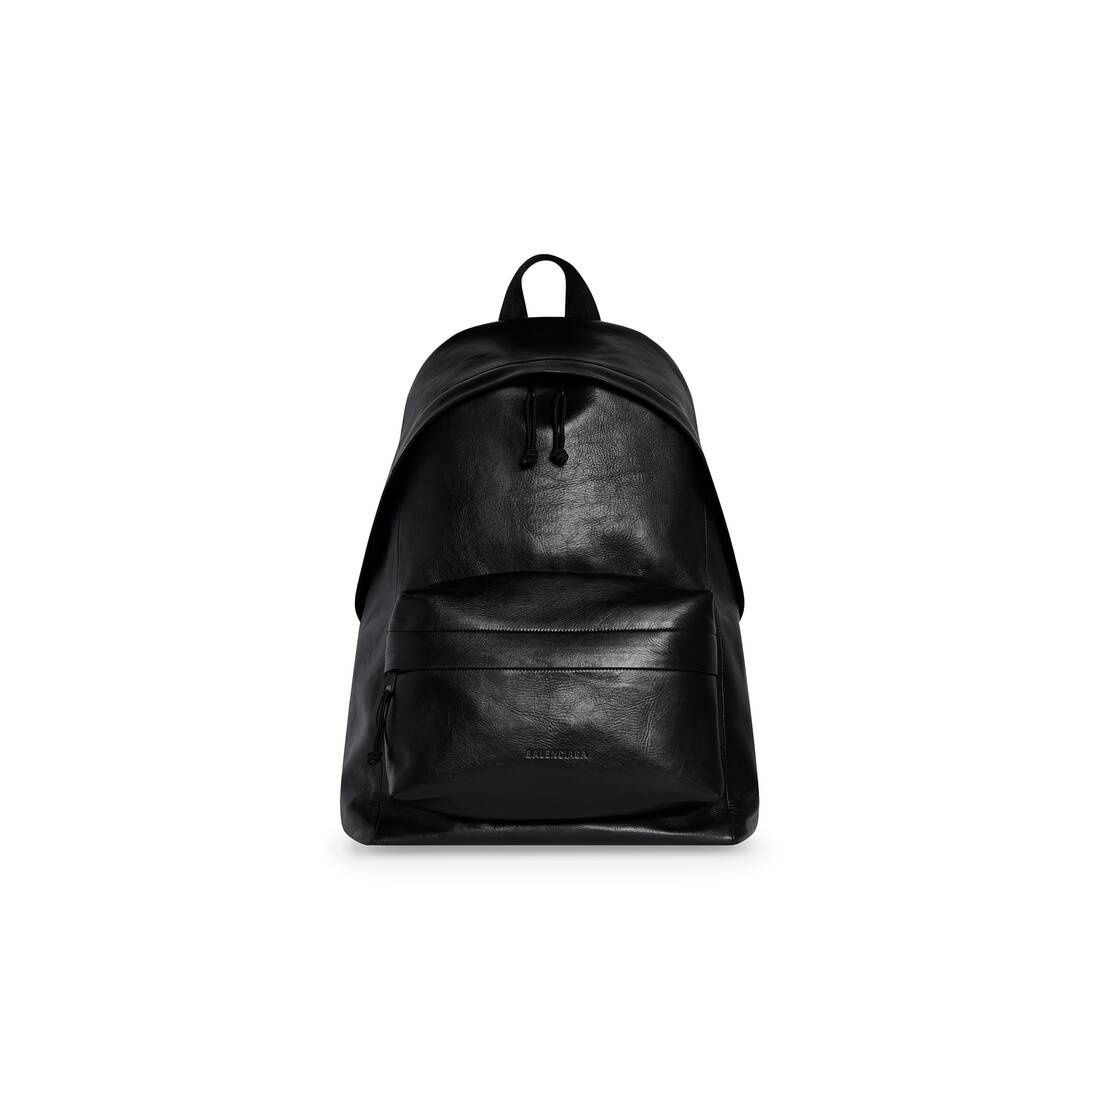 Men's Premium Xxl Backpack in Black - 1